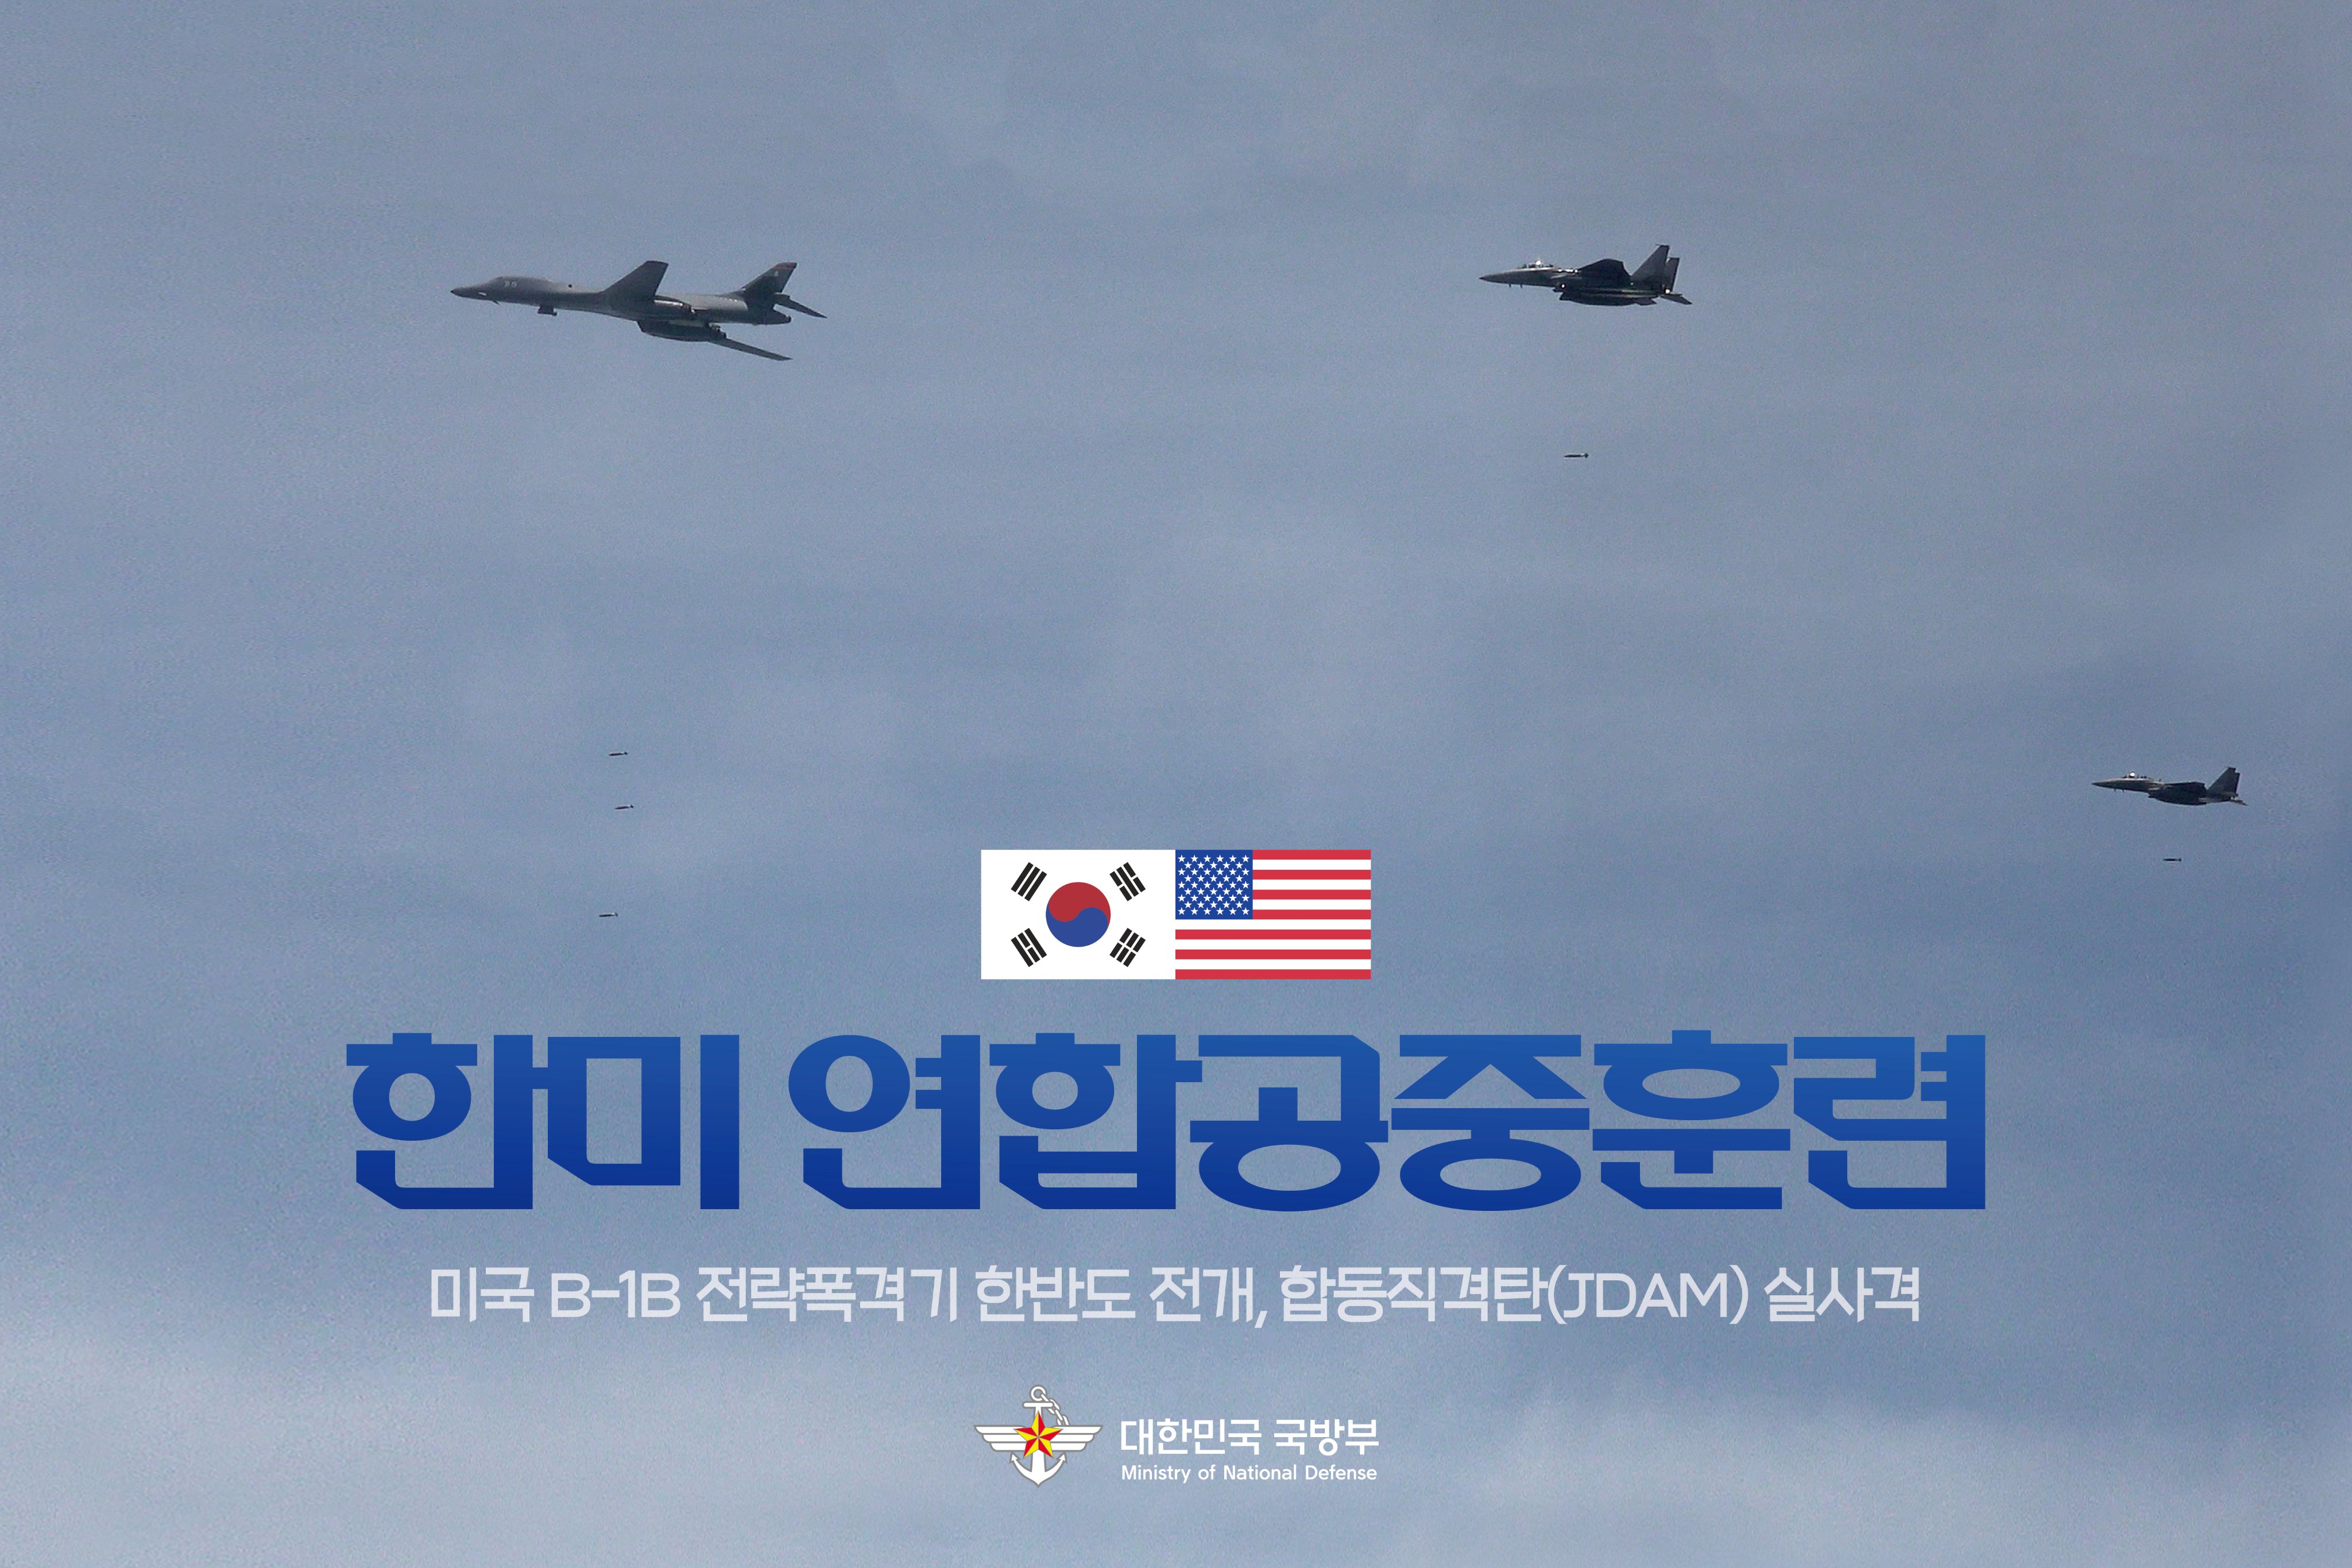 South Korea & U.S. Conduct Bombing Exercise After Kim Jong Un Raises Tensions